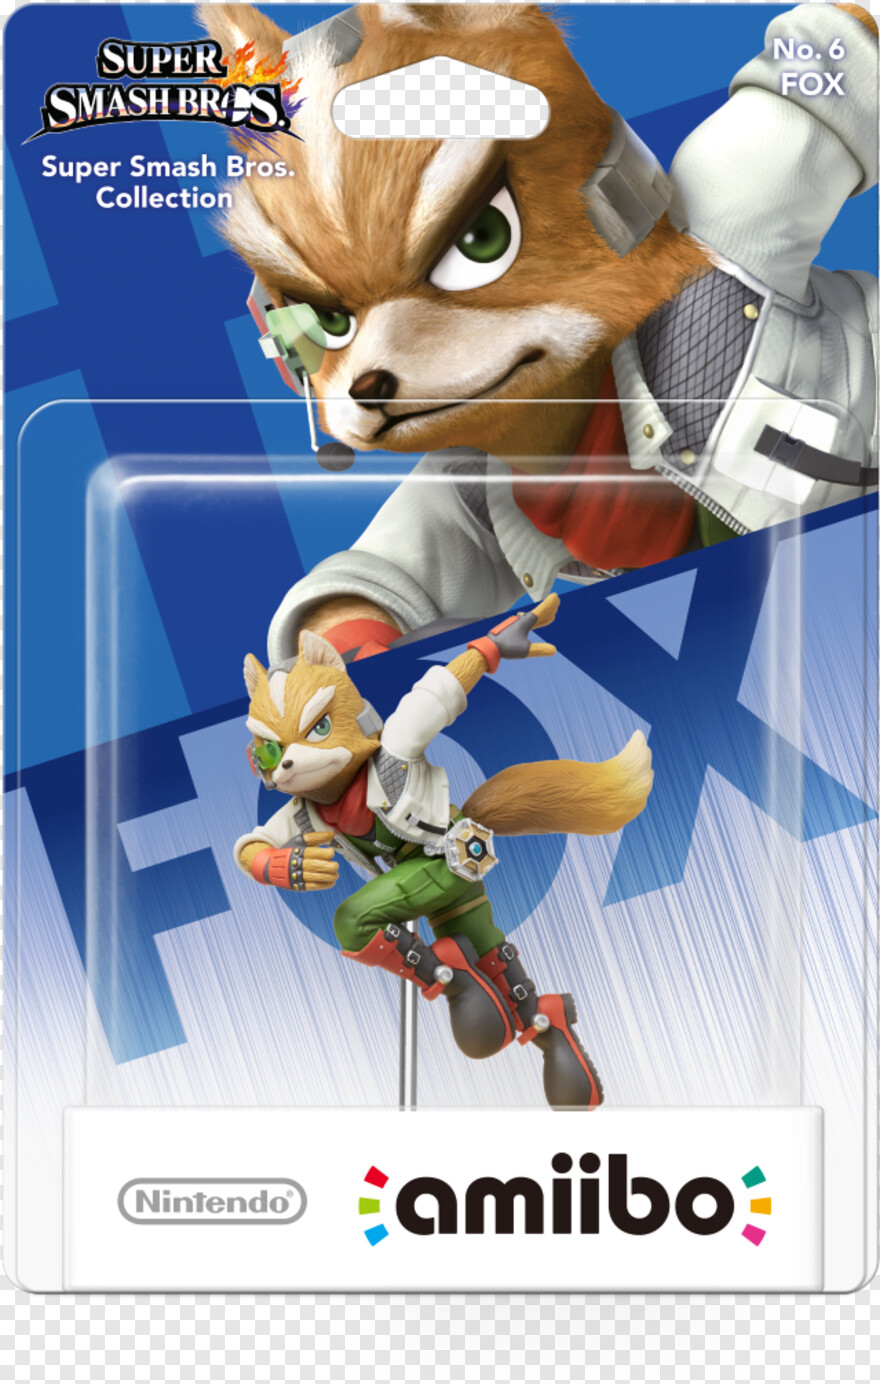 fox-logo # 814875